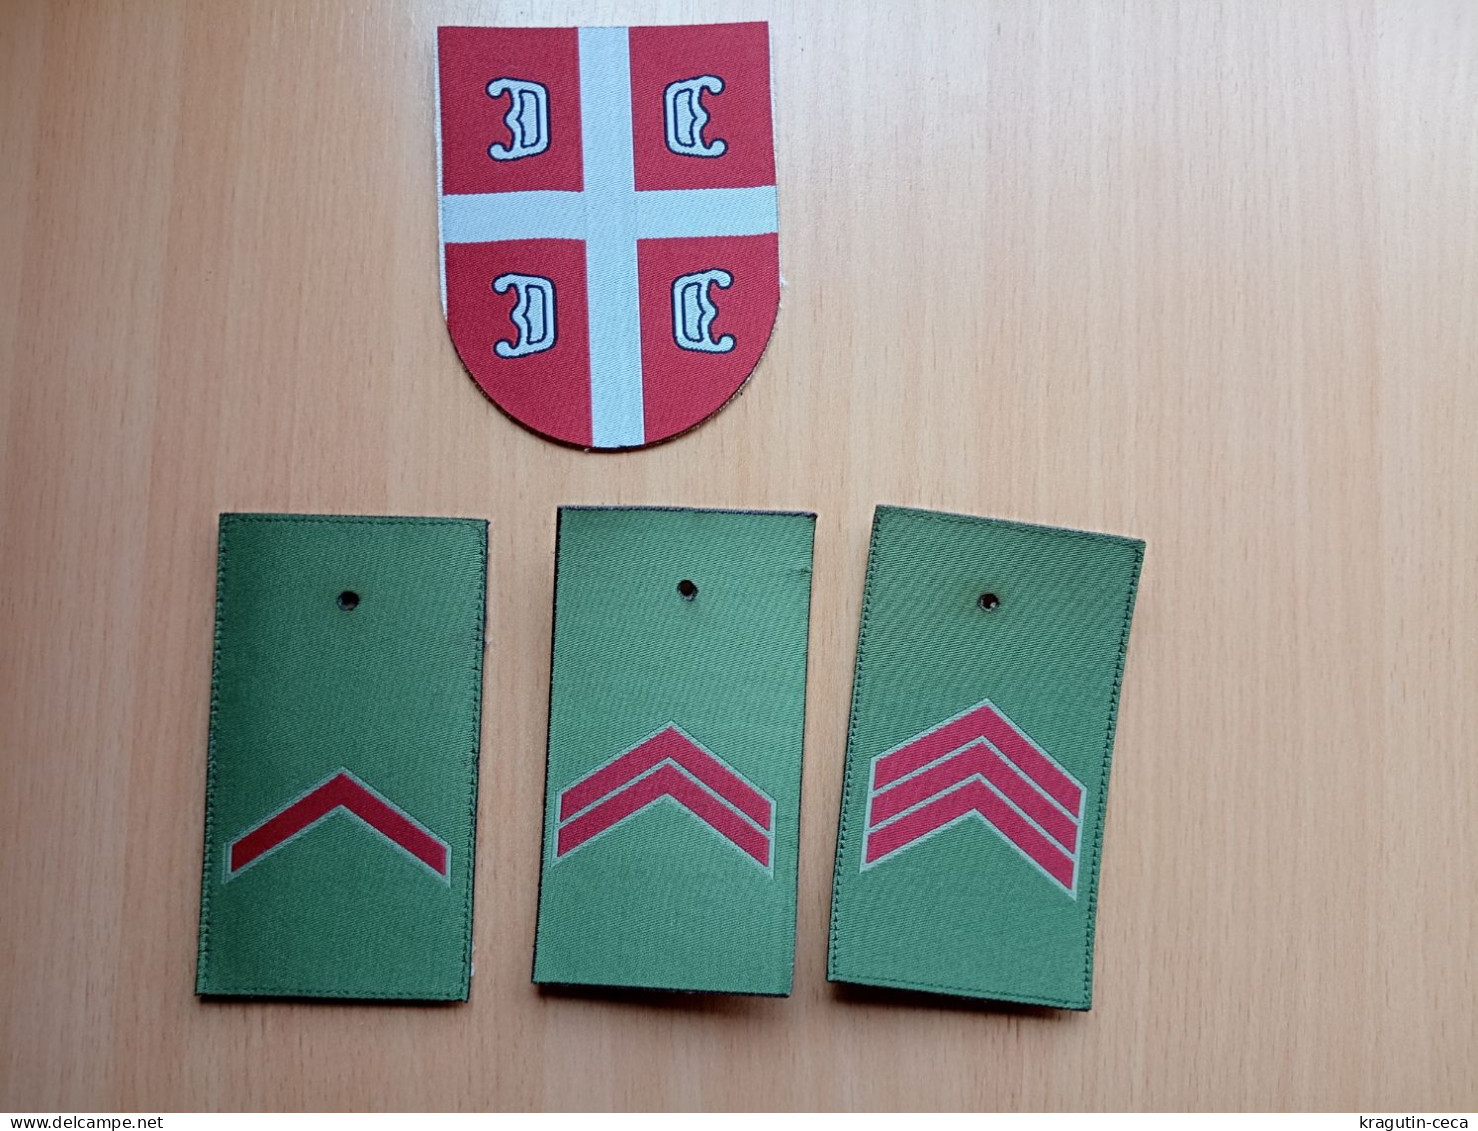 YUGOSLAVIA & SERBIA ARMY LOT PATCH MILITARY EMBLEM RANK INSIGNIA COCKADE DEFENSE - Ecussons Tissu